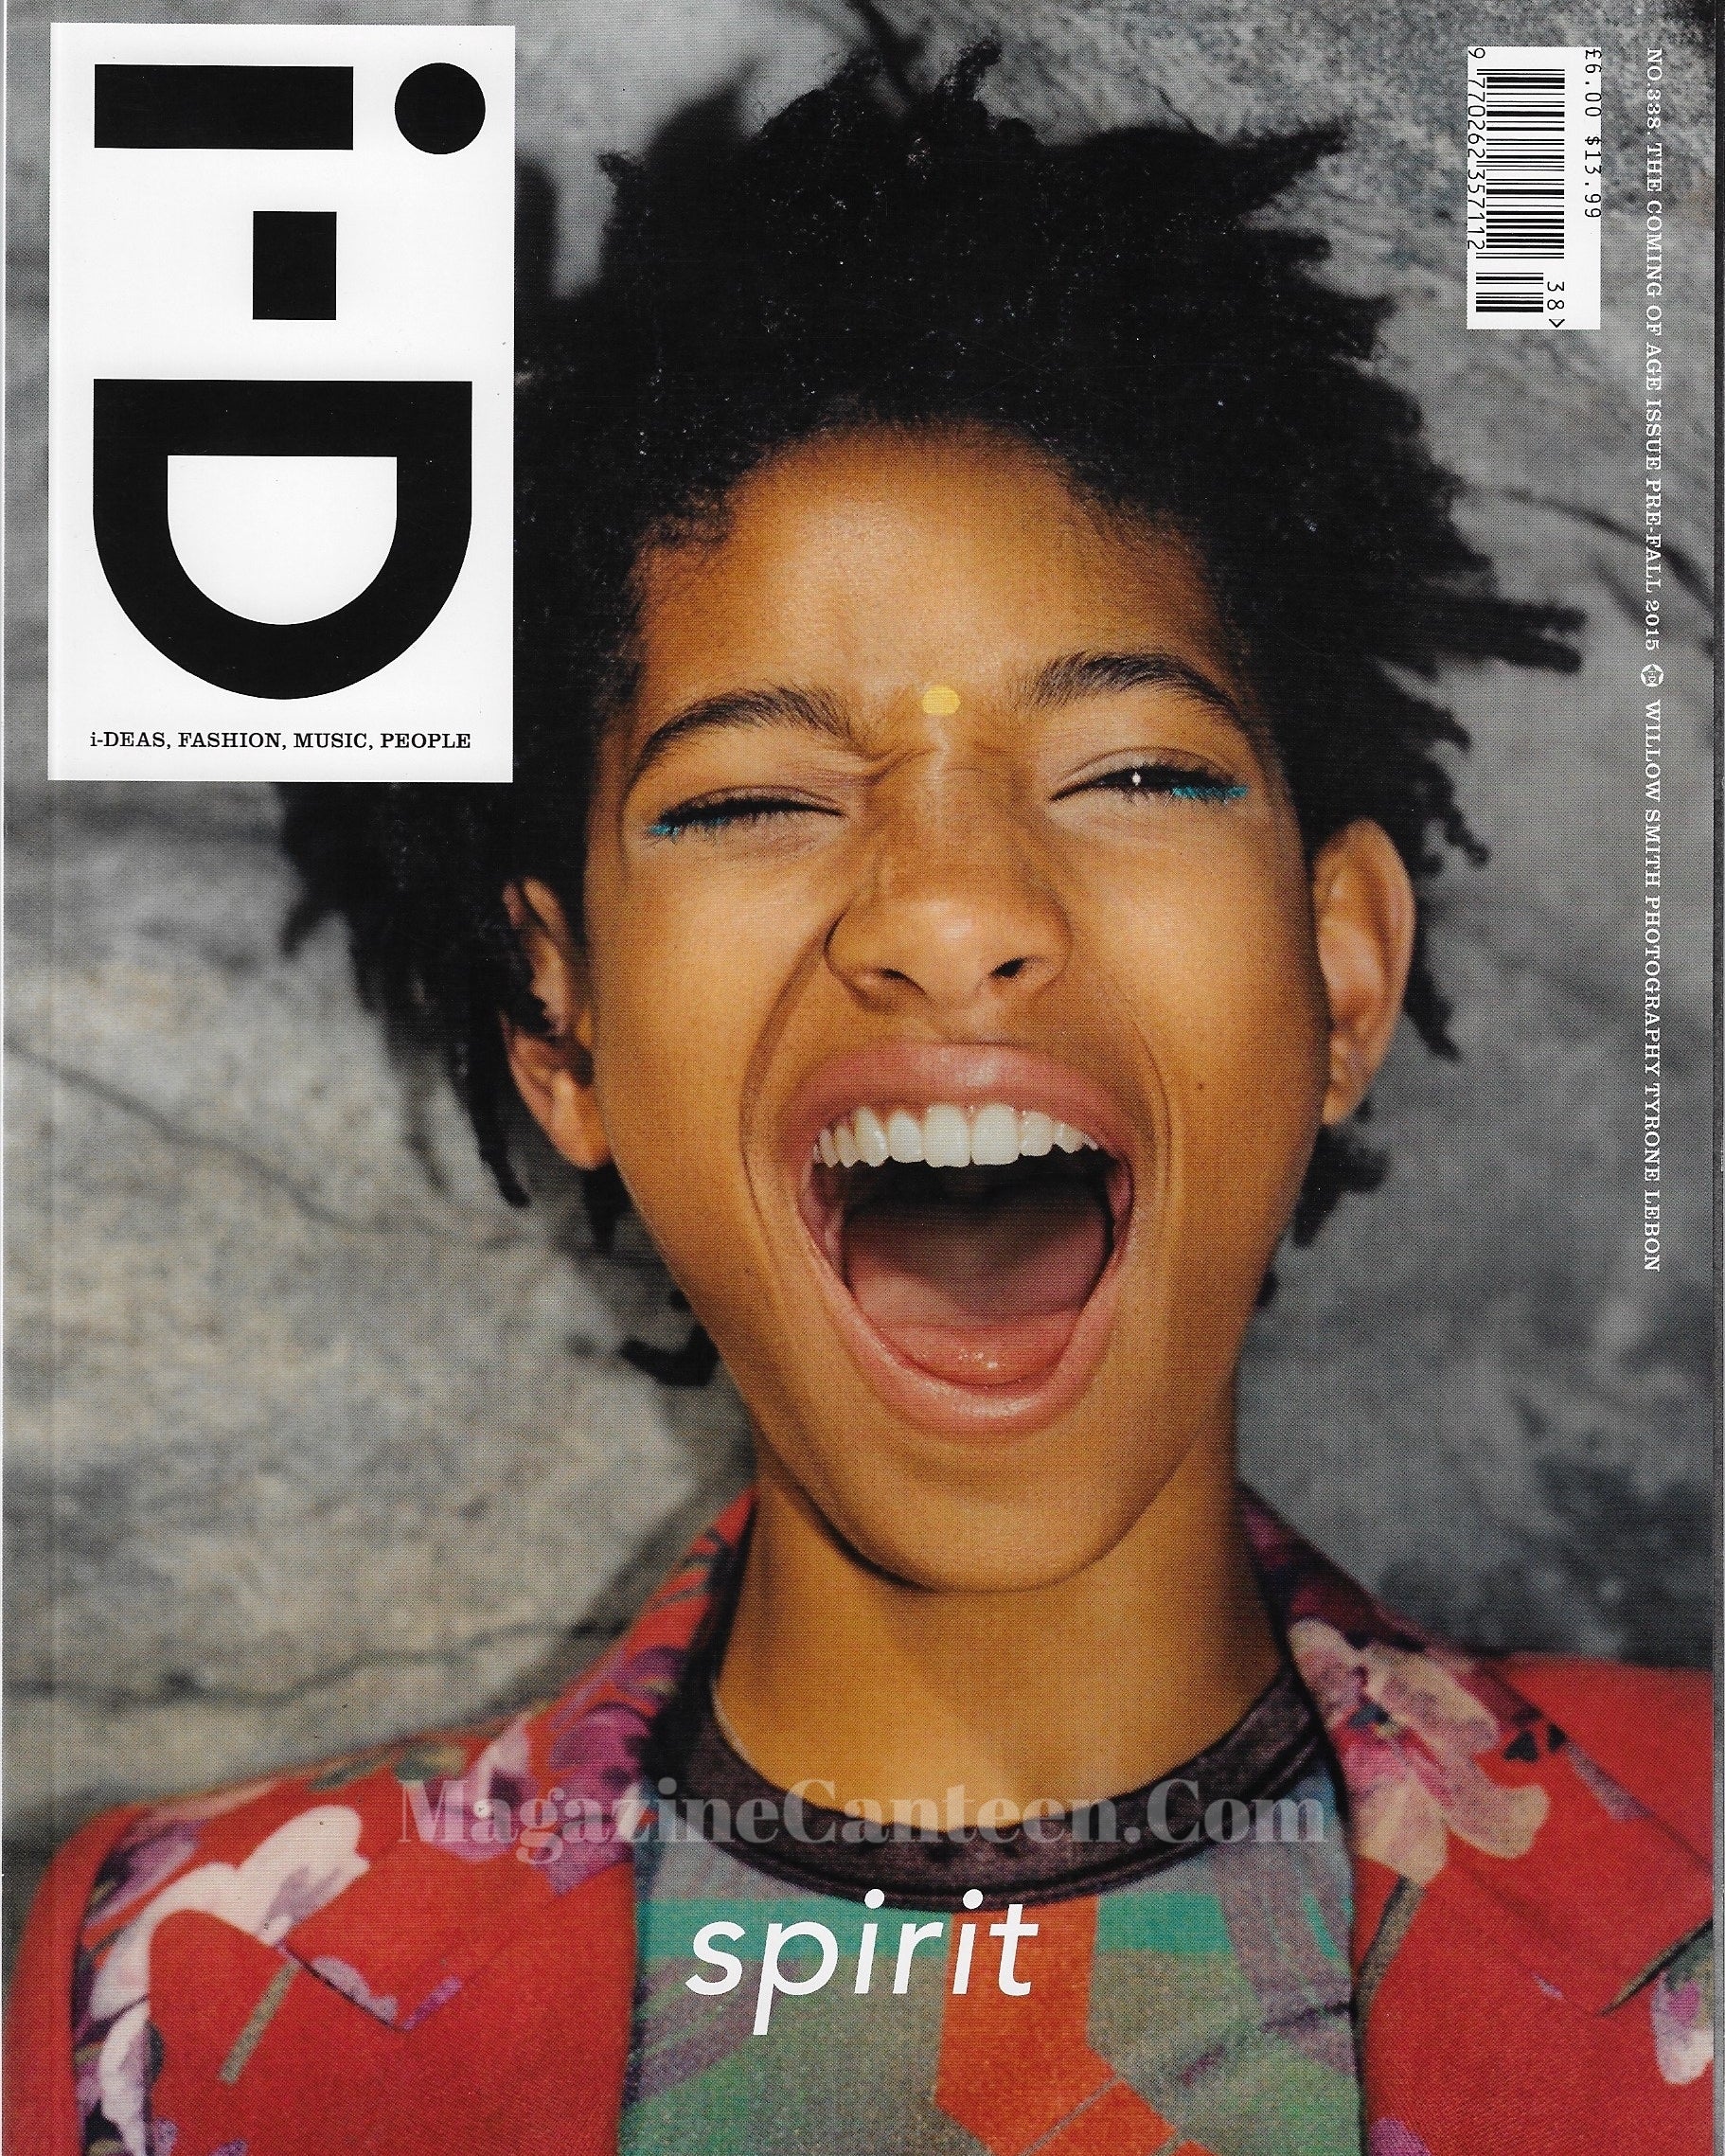 I-D Magazine 338 - Willow Smith 2015